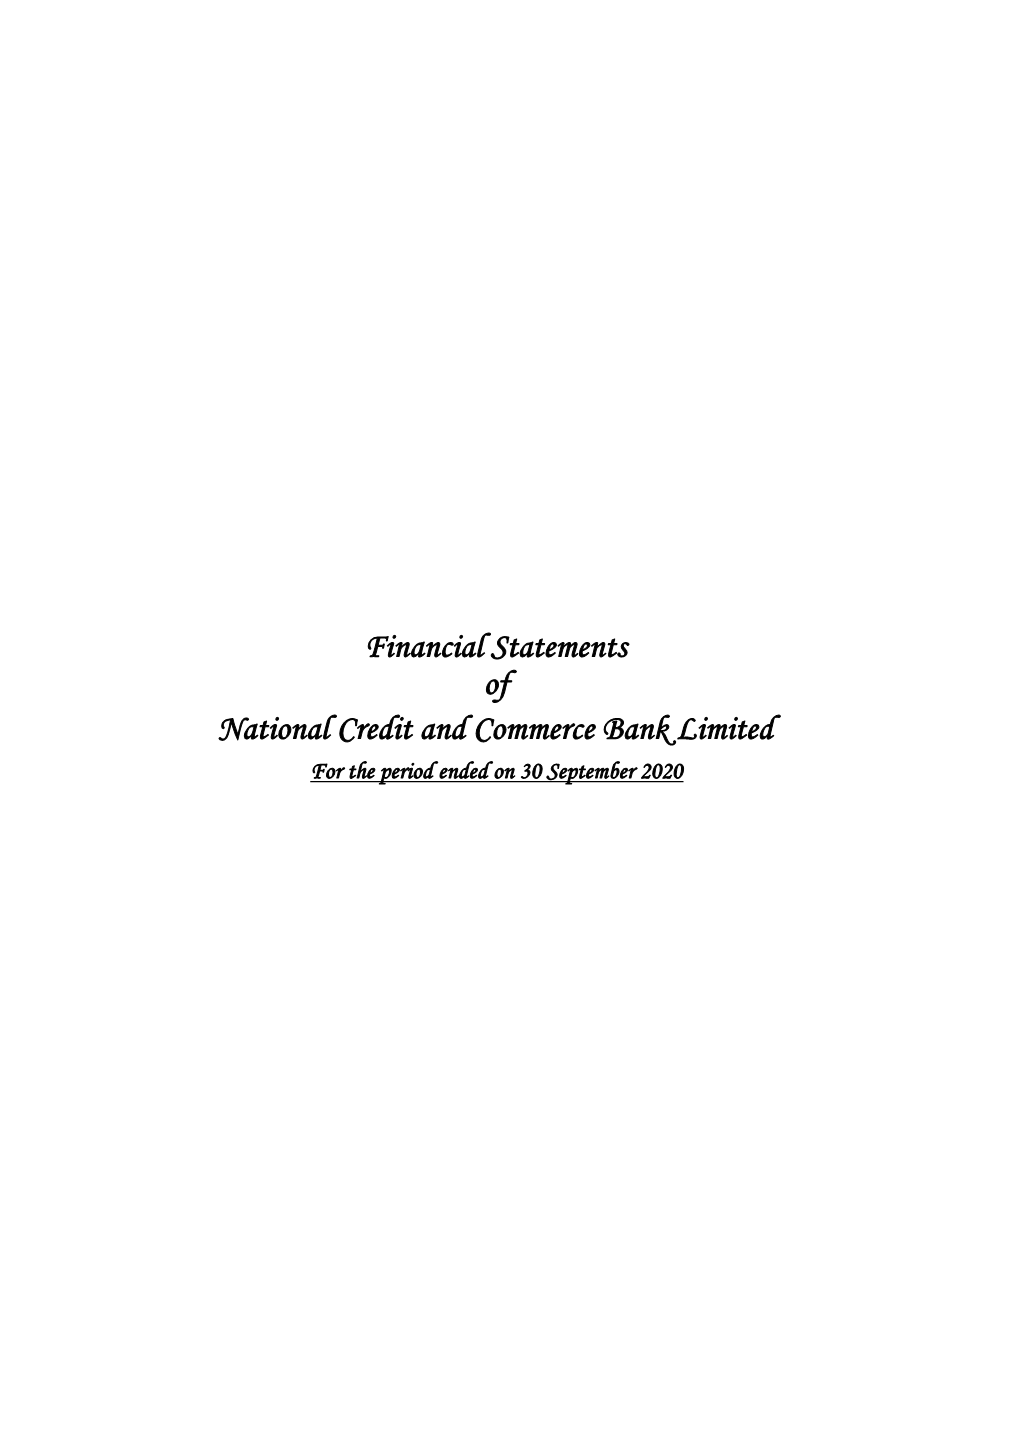 NCC FS 2004 -.::NCC Bank Limited